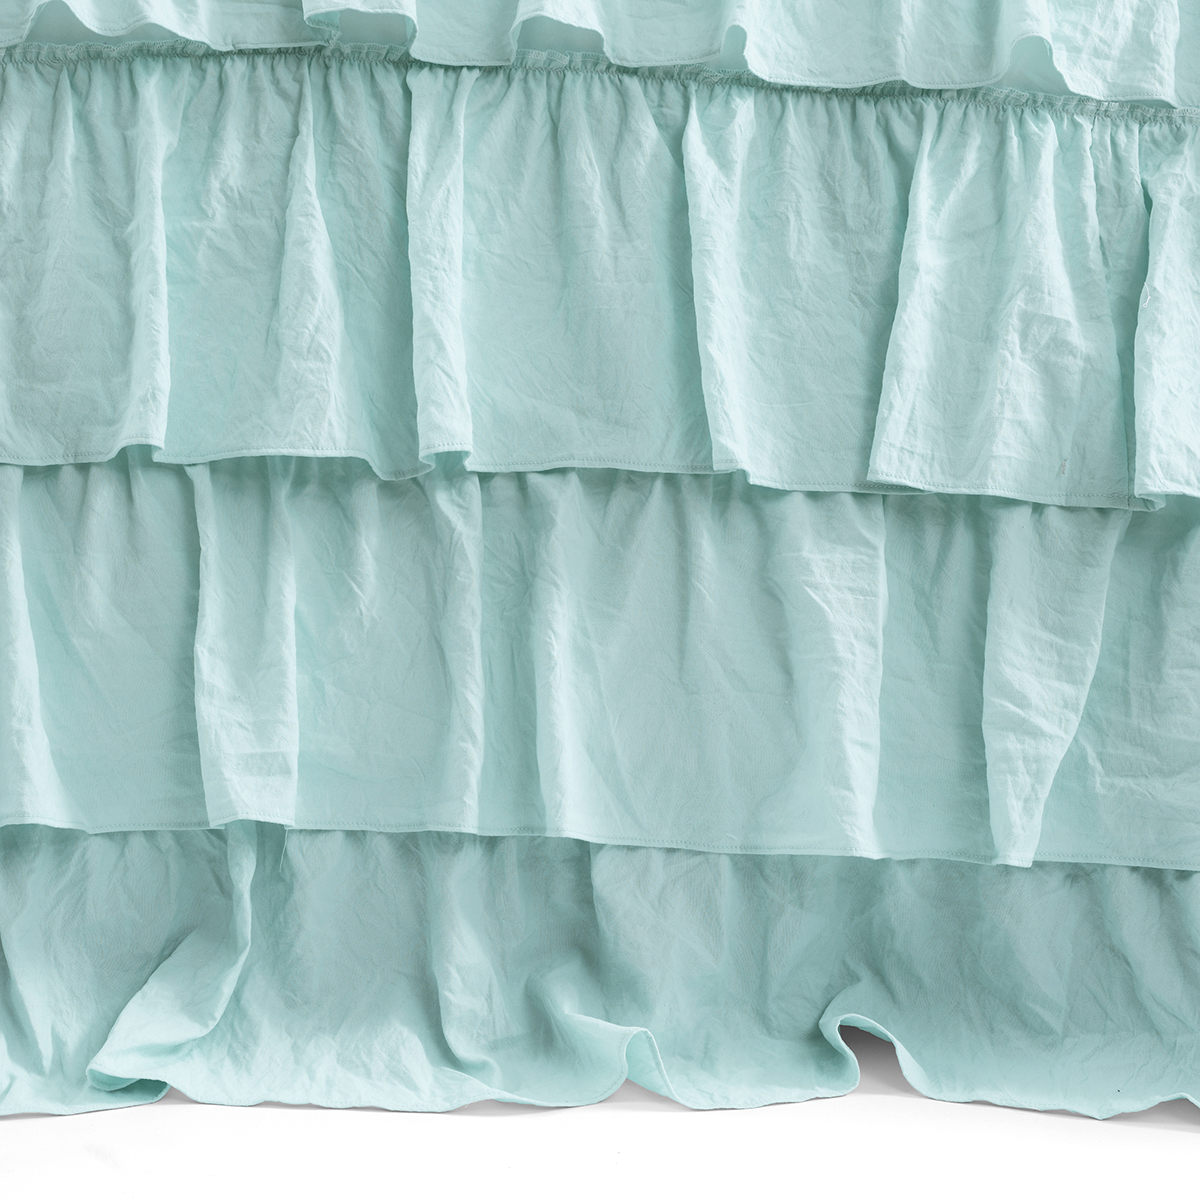 Lush Decor(R) Allison Ruffle Skirt Bedspread Set